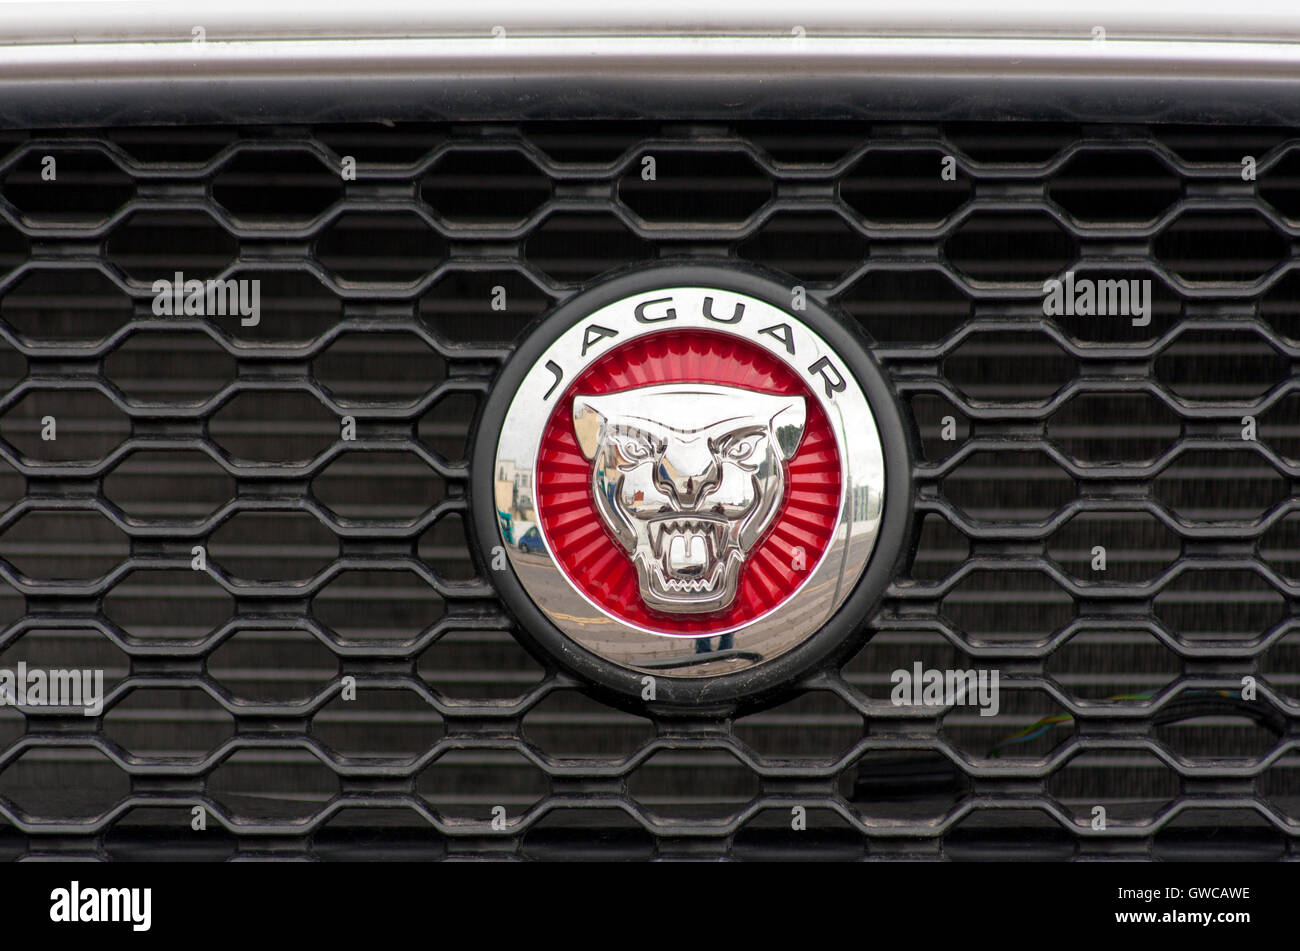 jaguar Car Grille badge Stock Photo